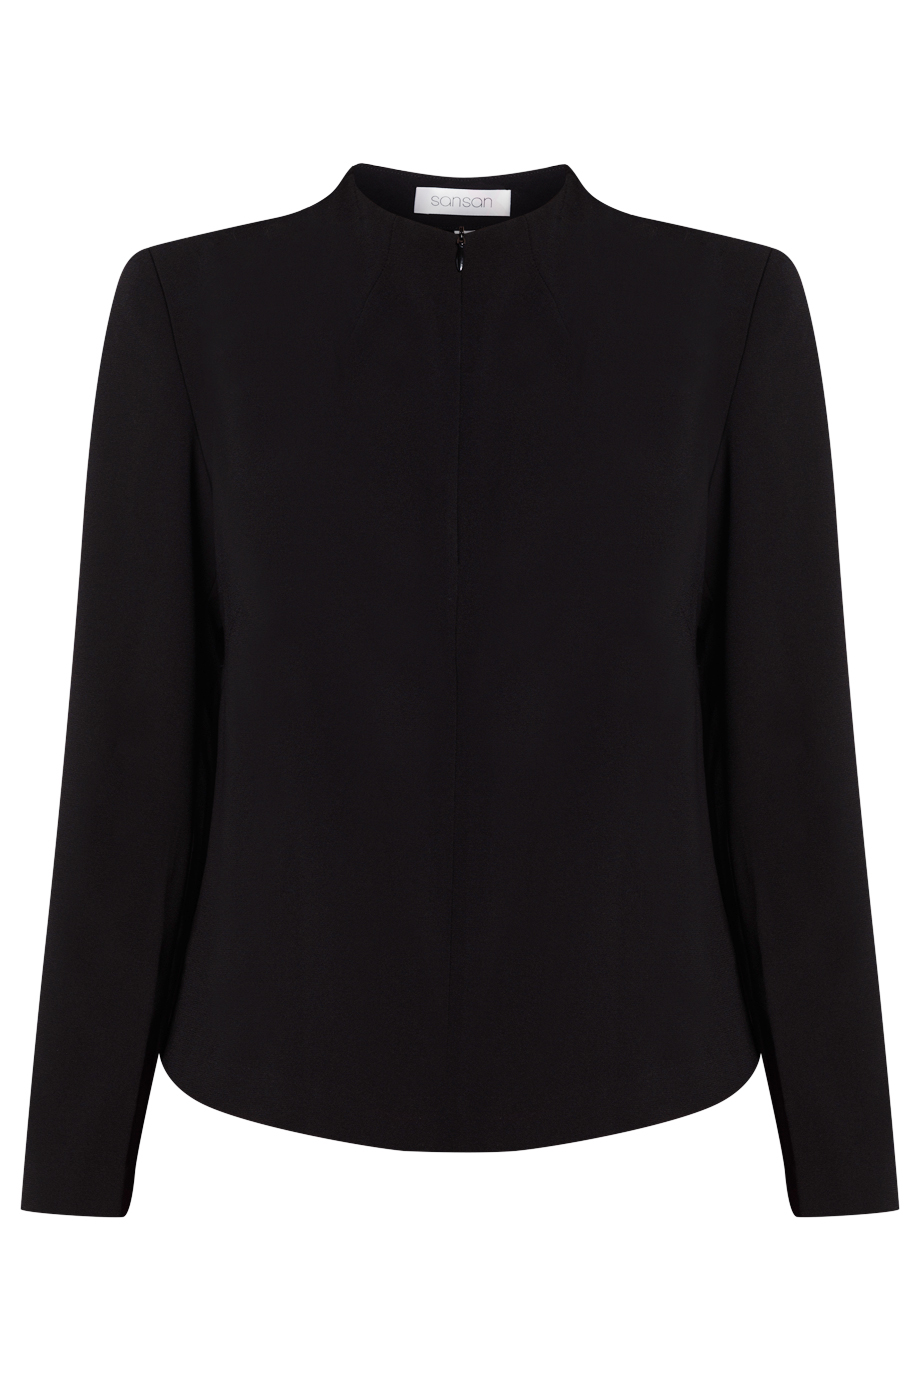 Sienna High-neck Suit Crop Top/ Black 2143